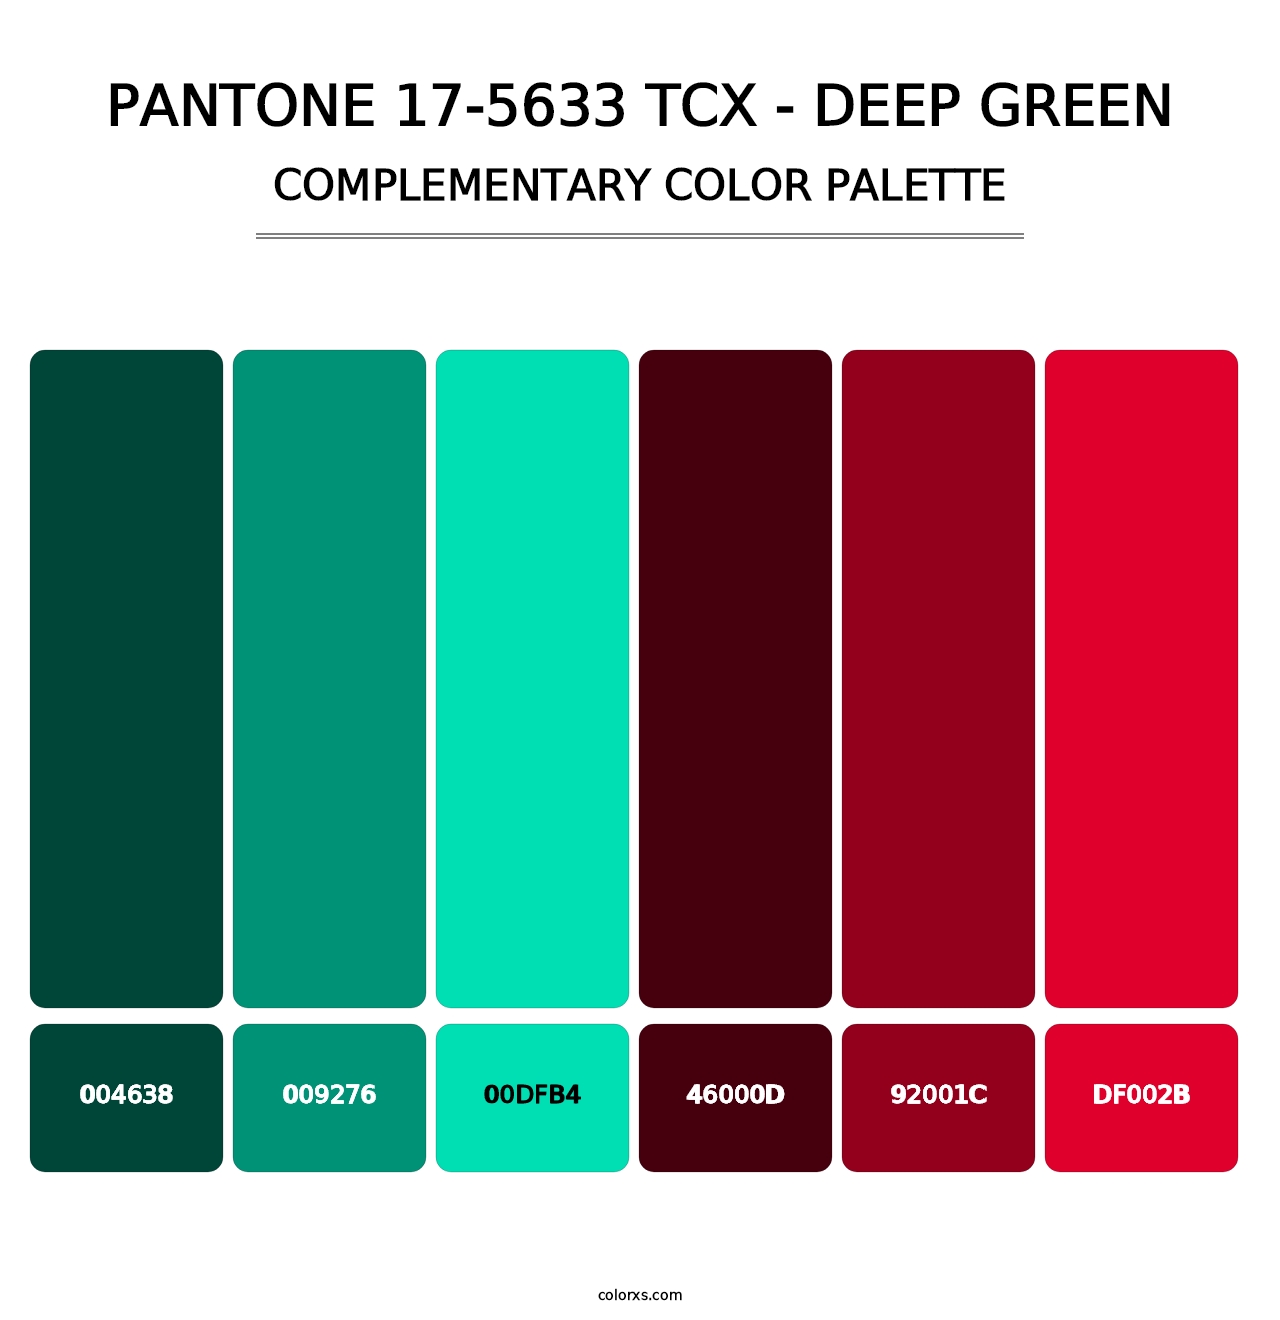 PANTONE 17-5633 TCX - Deep Green - Complementary Color Palette